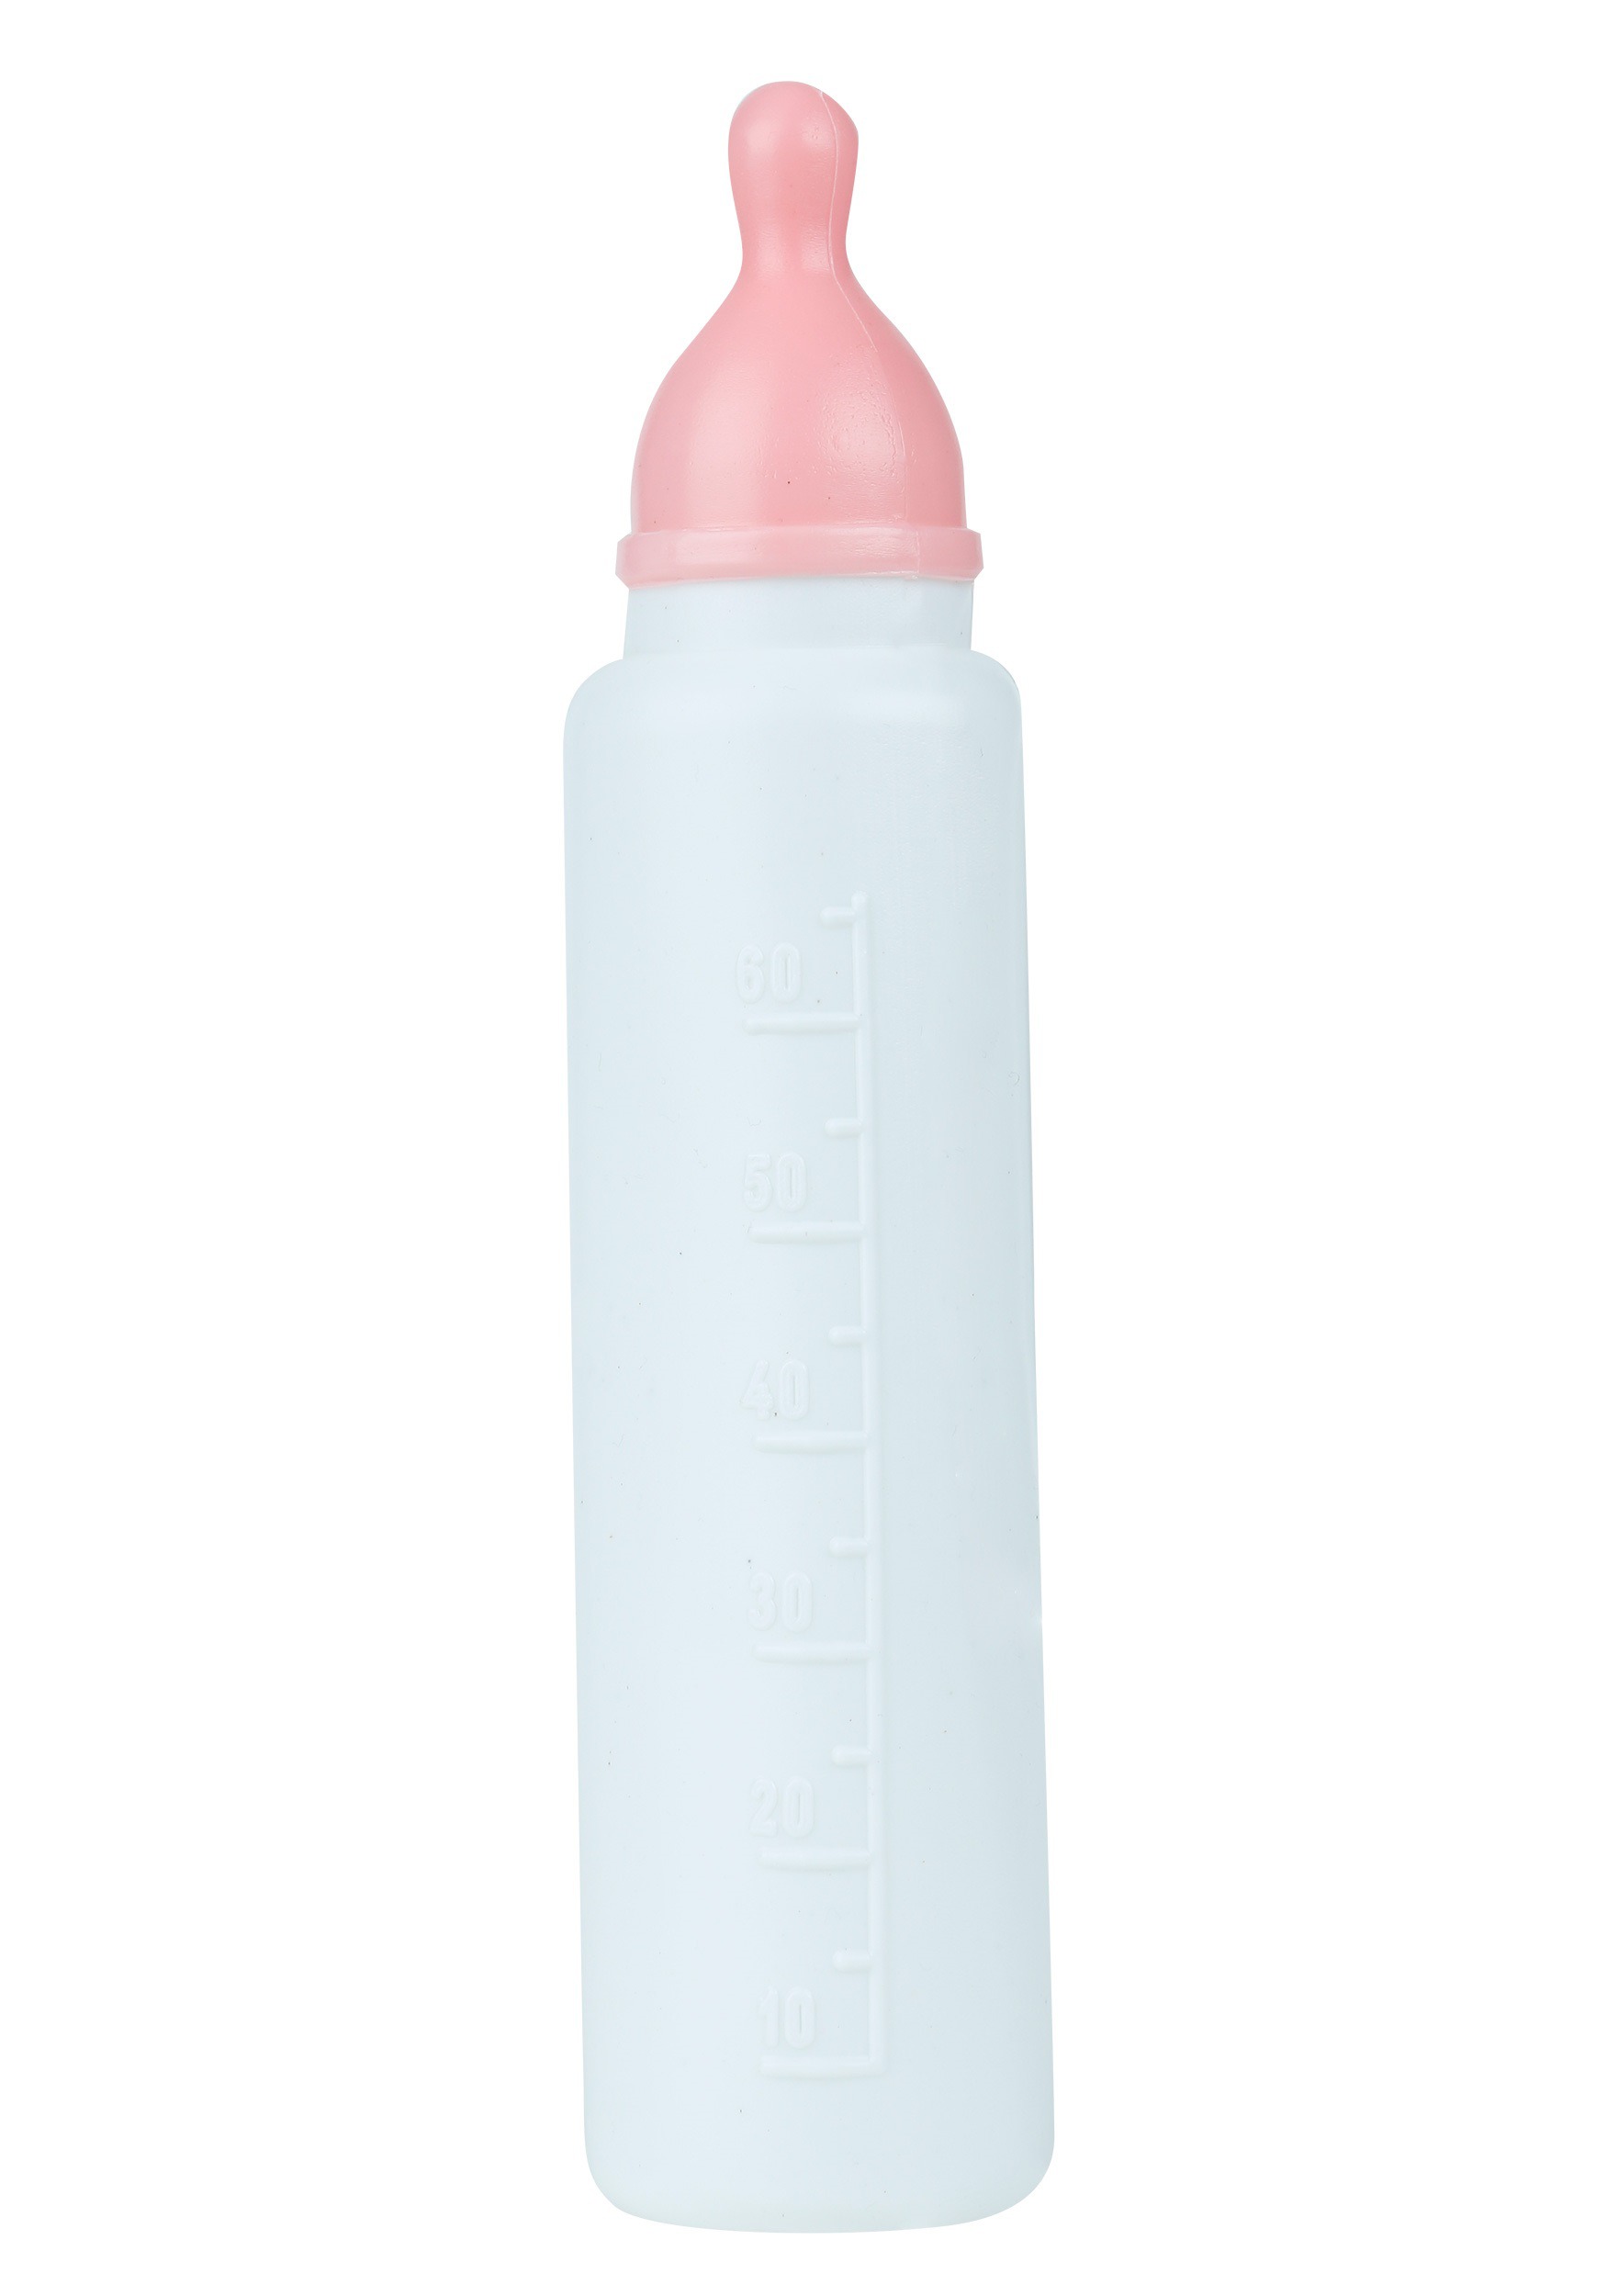 https://images.halloweencostumes.com/products/30628/1-1/jumbo-pink-baby-bottle.jpg